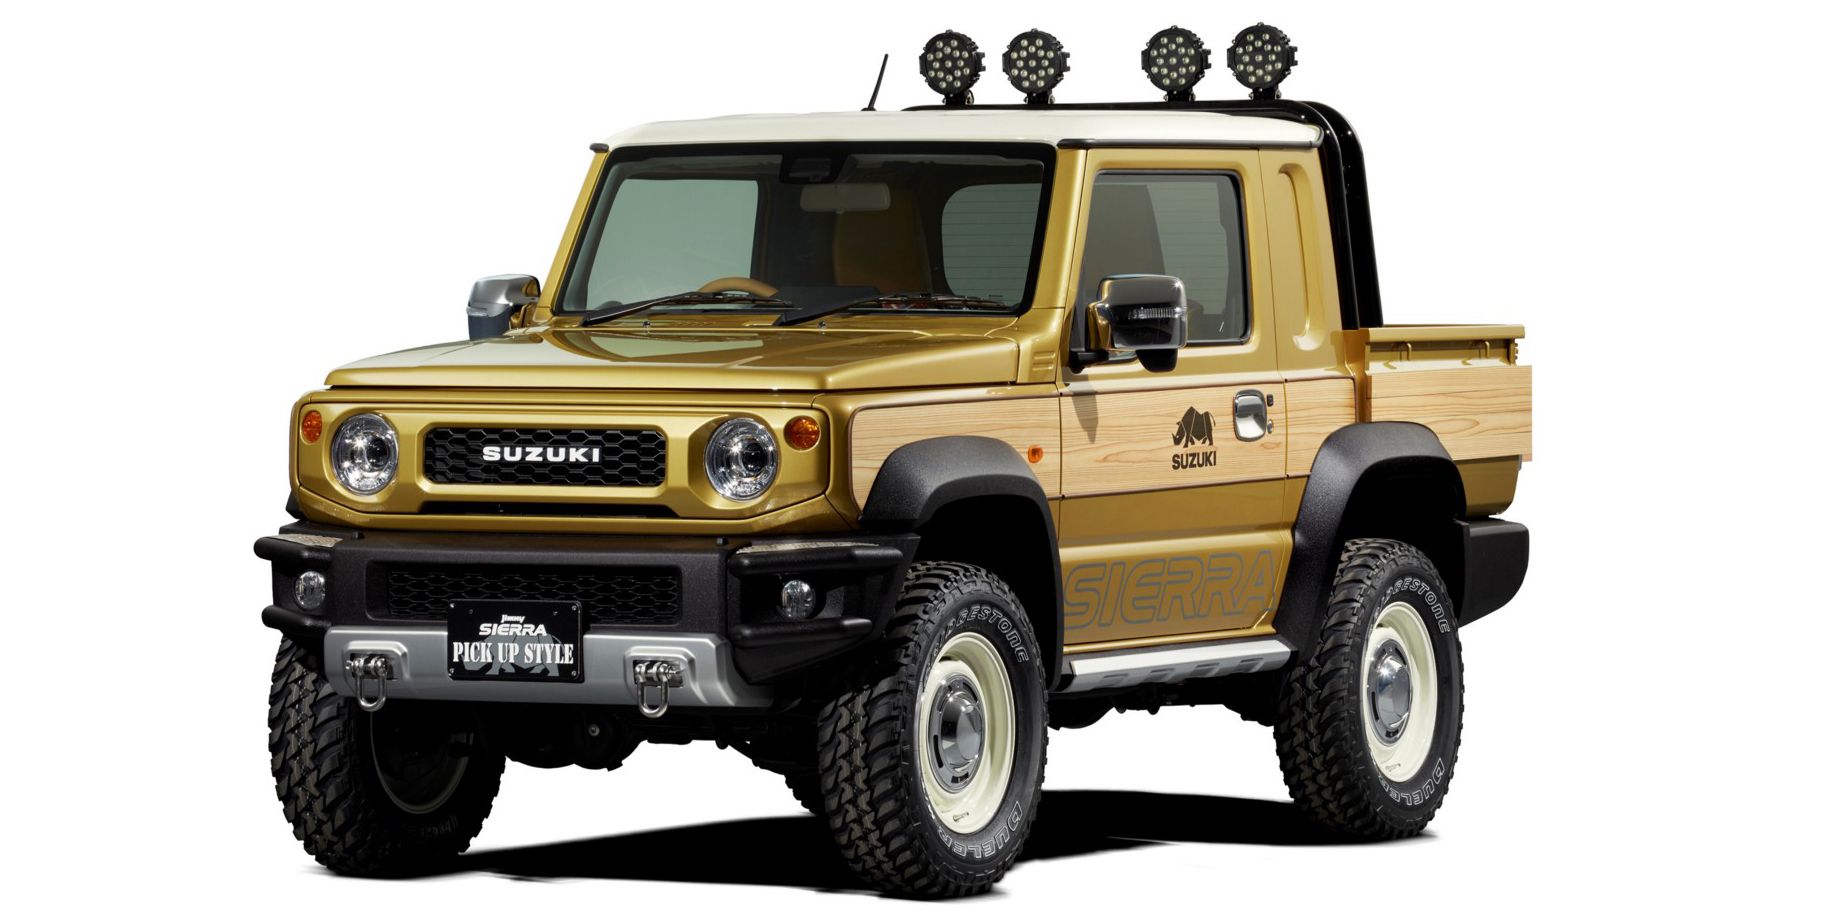 A Suzuki Jimny Pickup? It Could Be Happening